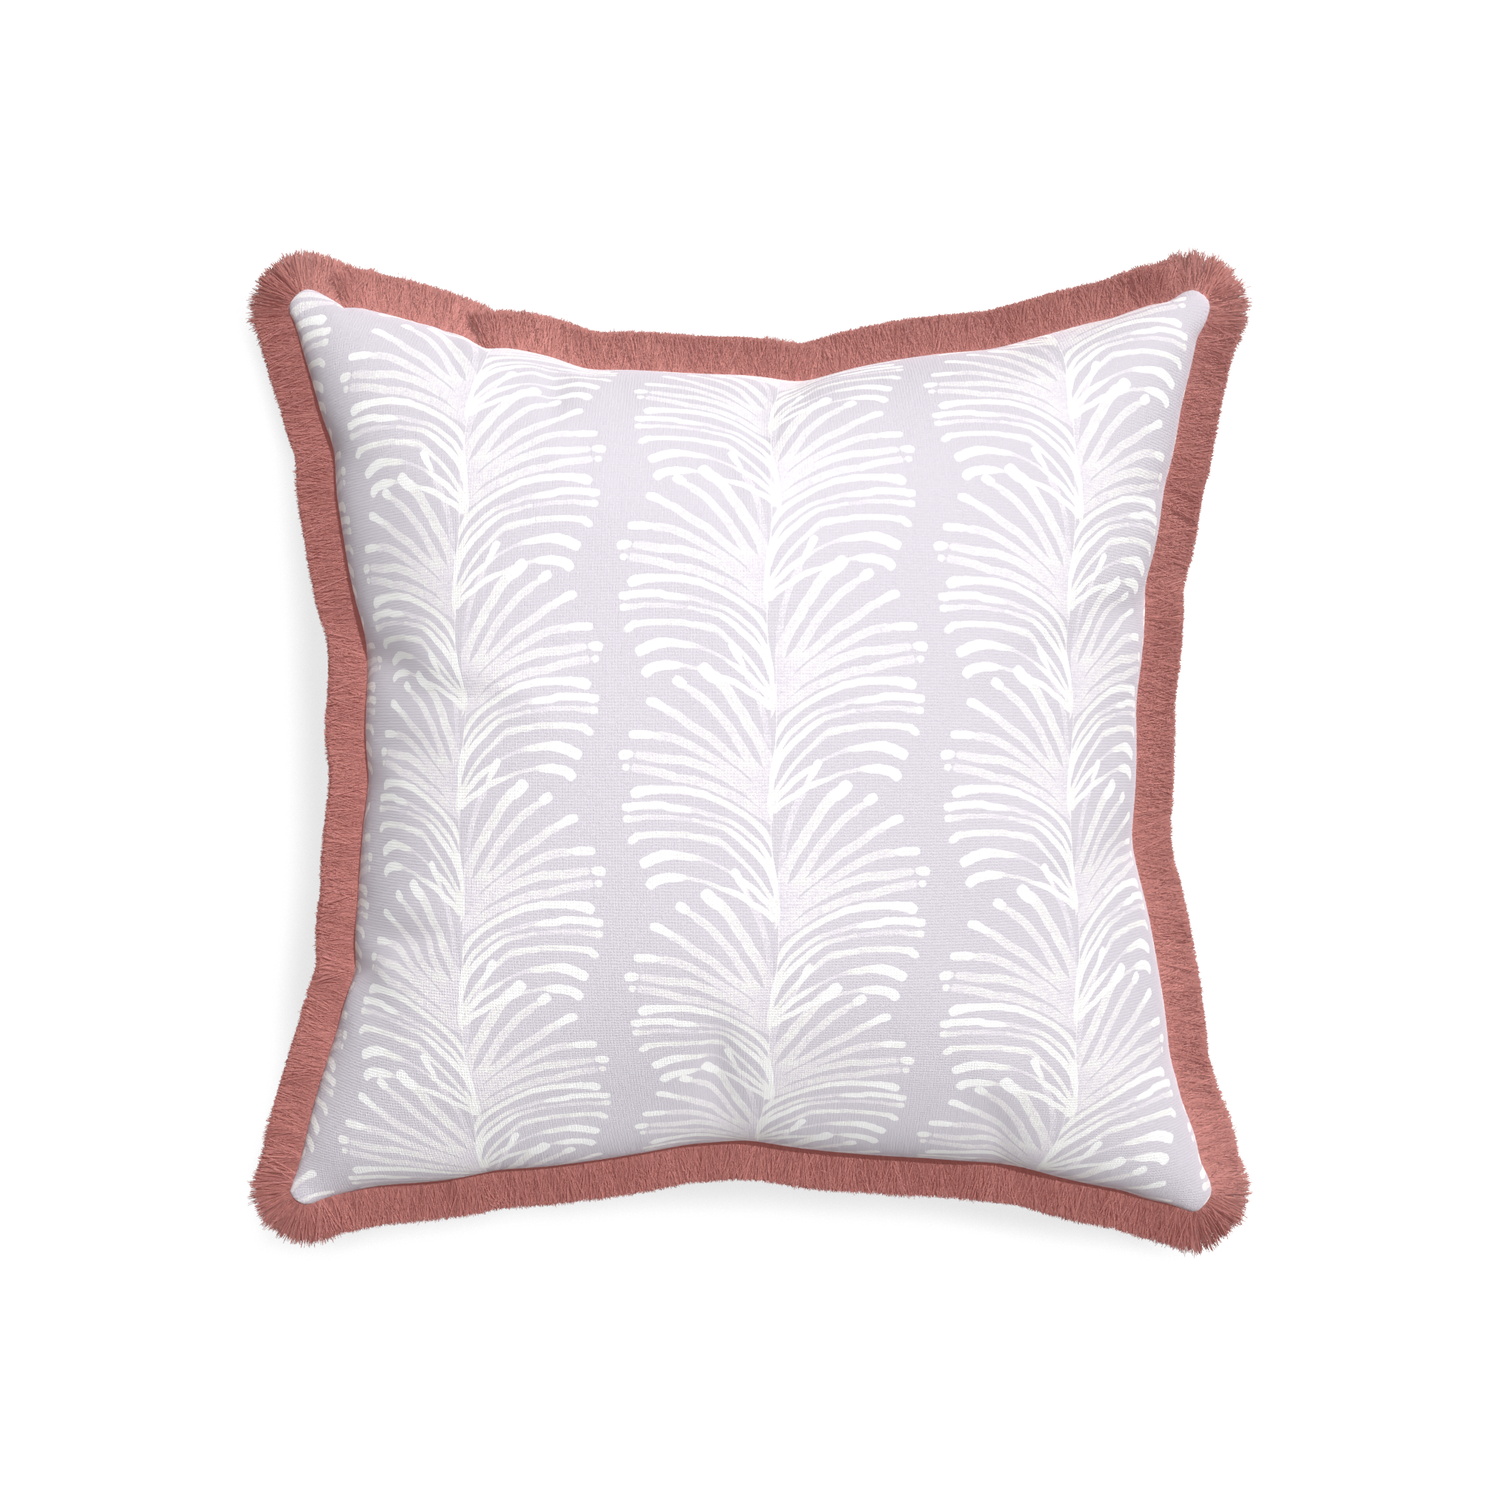 20-square emma lavender custom pillow with d fringe on white background